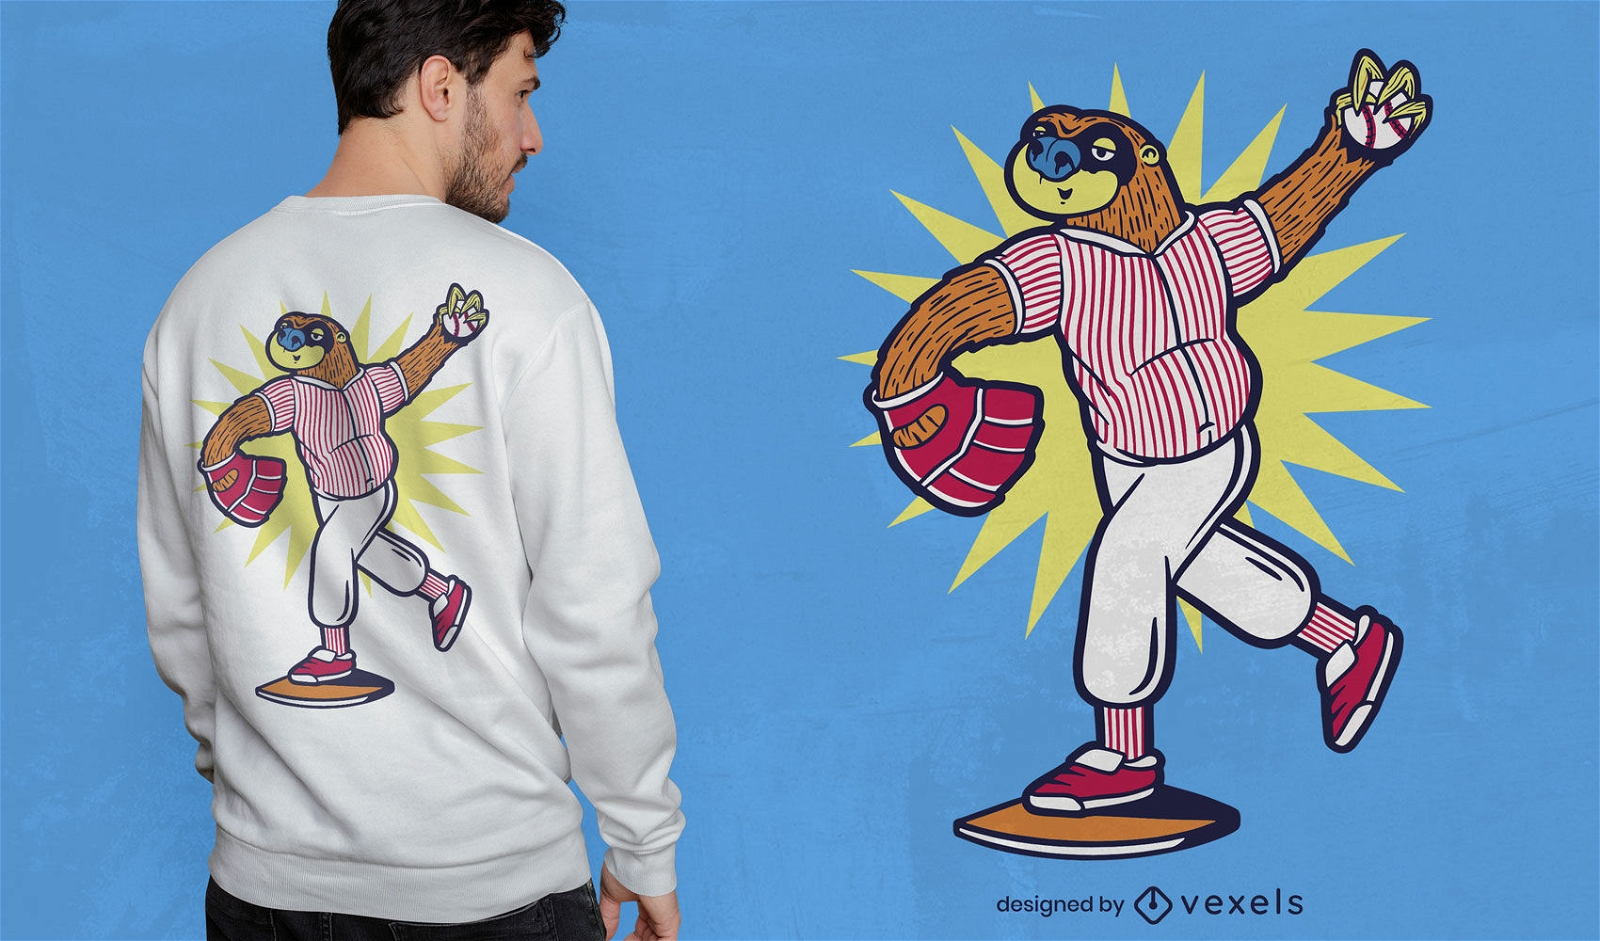 Diseño de camiseta de personaje de perezoso de béisbol.